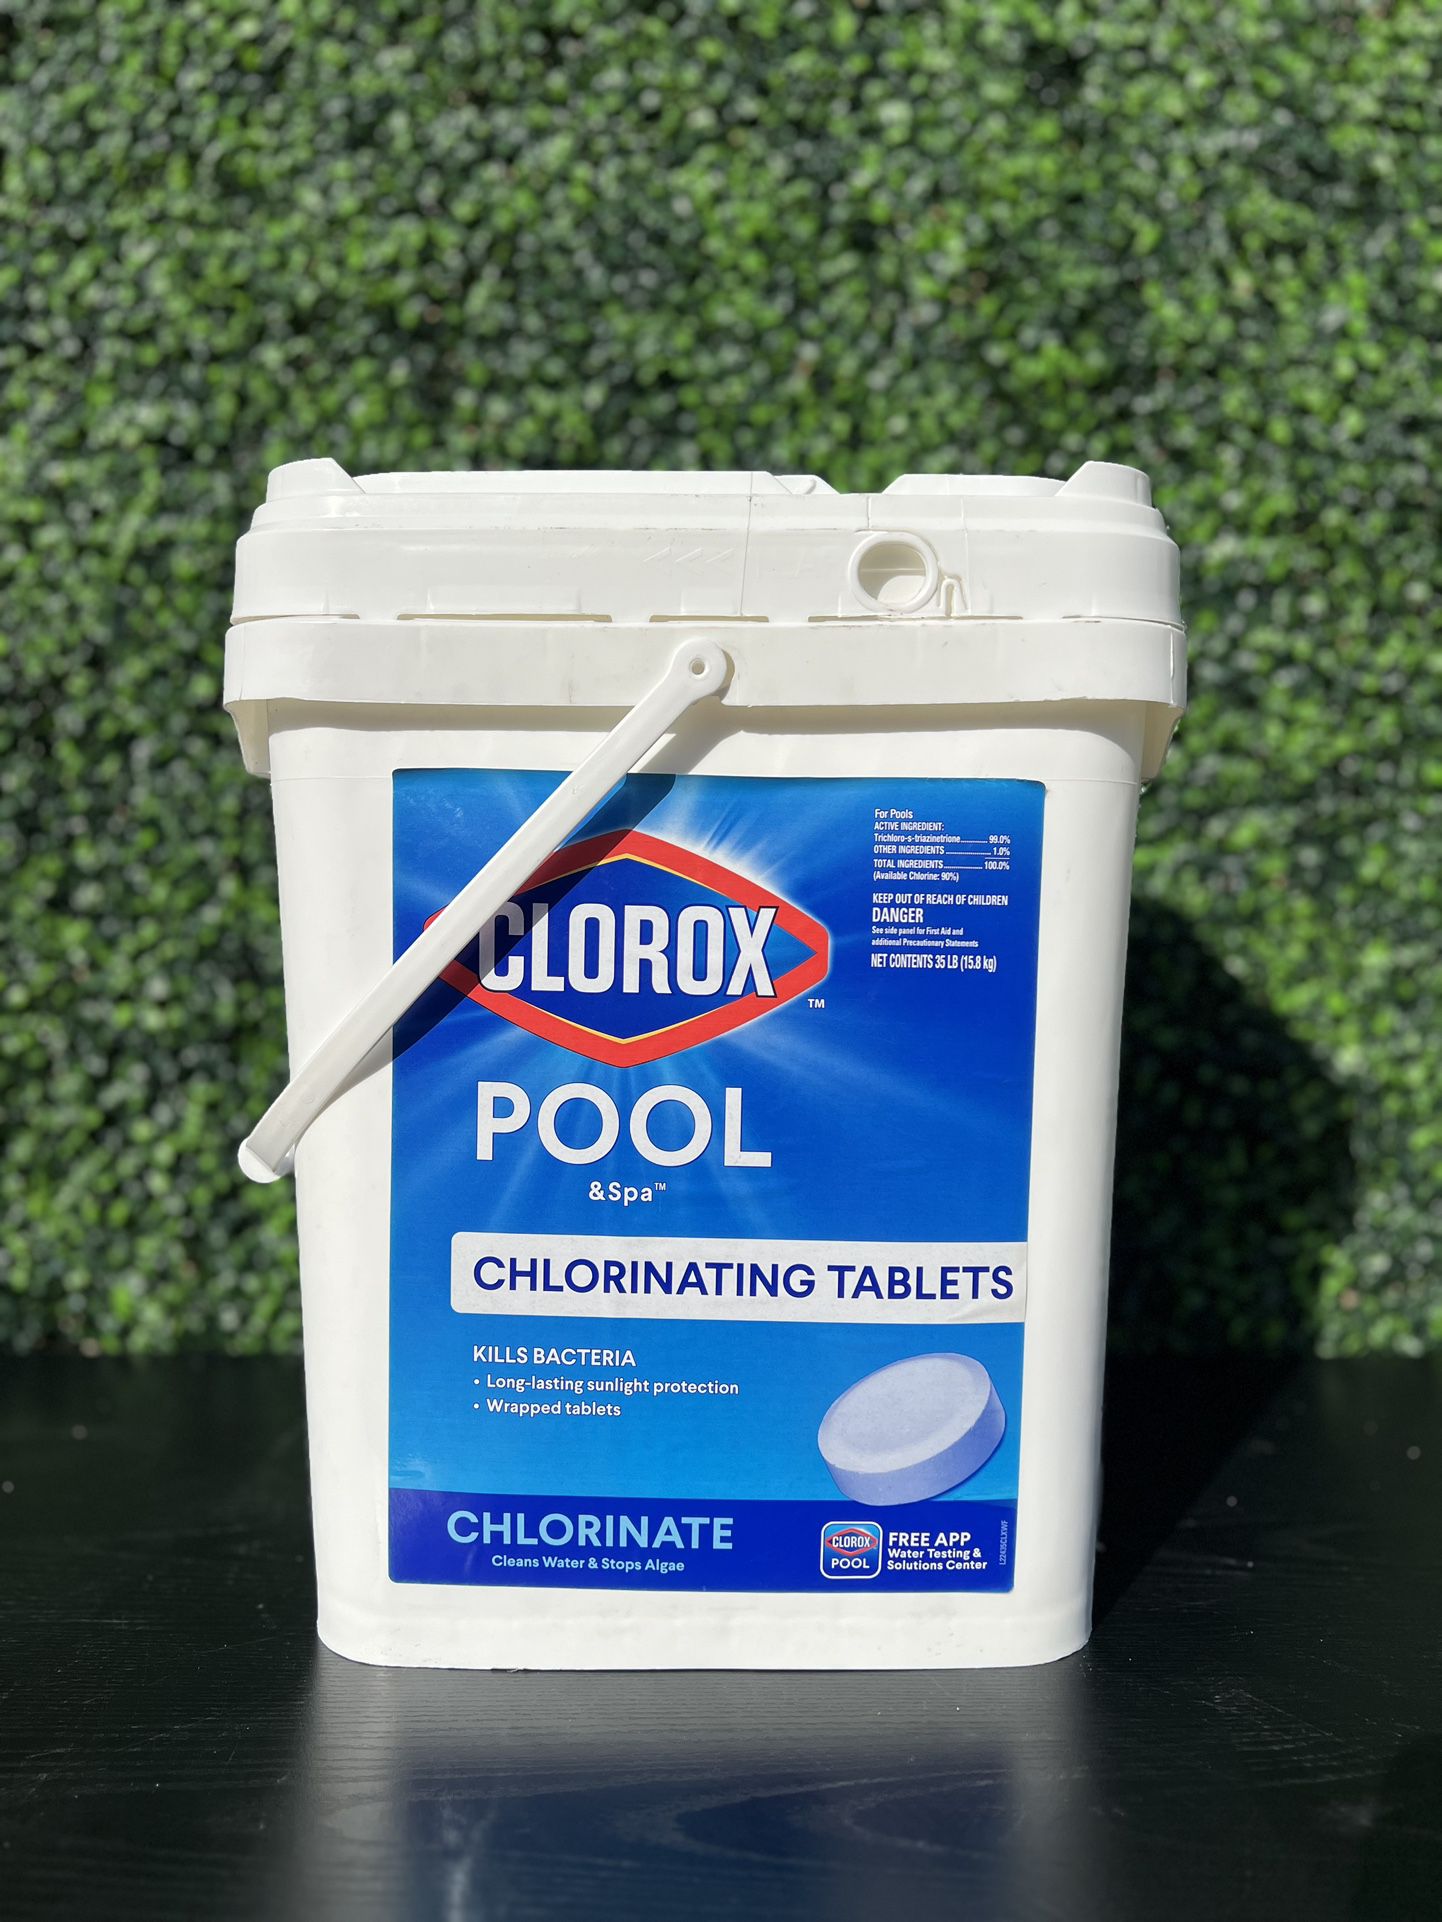 New Clorox Pool Chlorine 